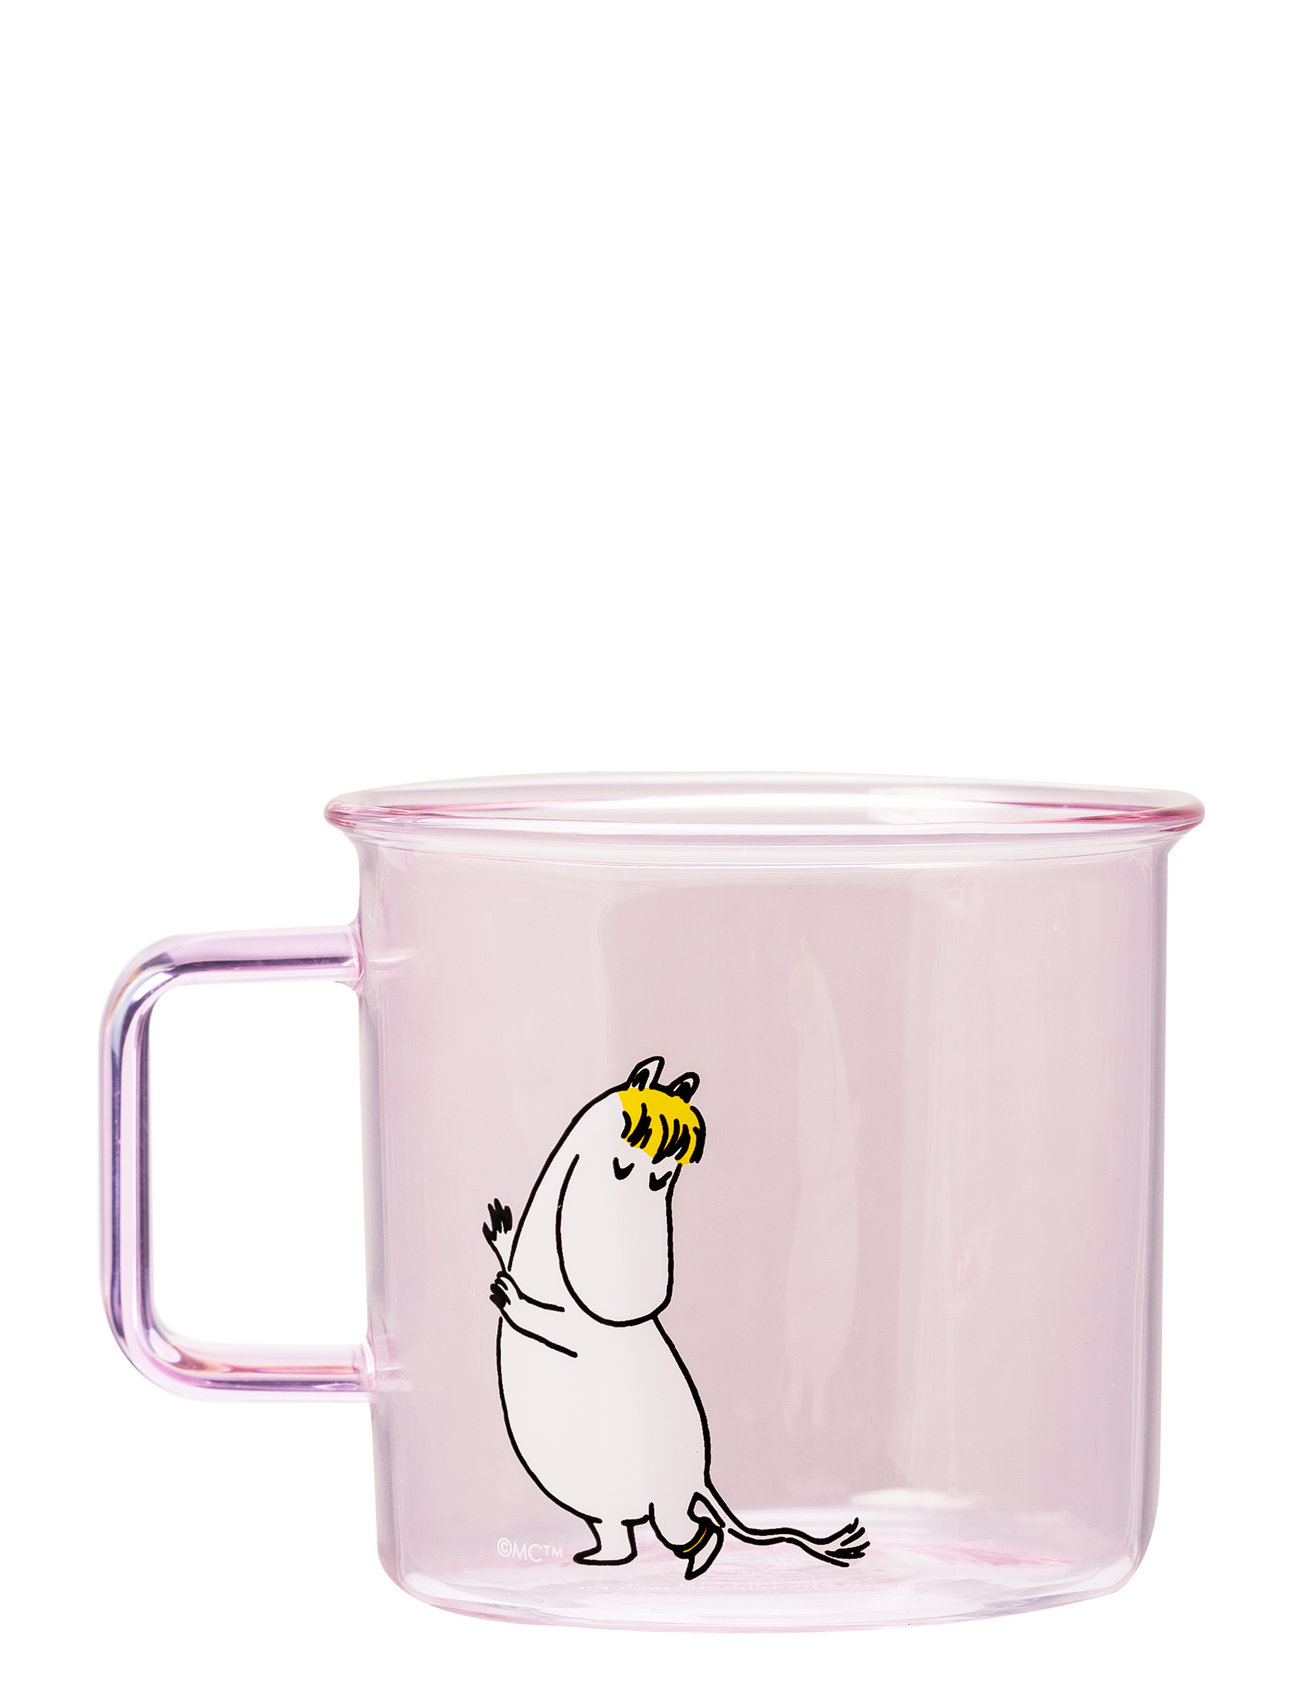 Moomin Glass Mug Snorkmaiden Home Tableware Cups & Mugs Coffee Cups Pink Moomin